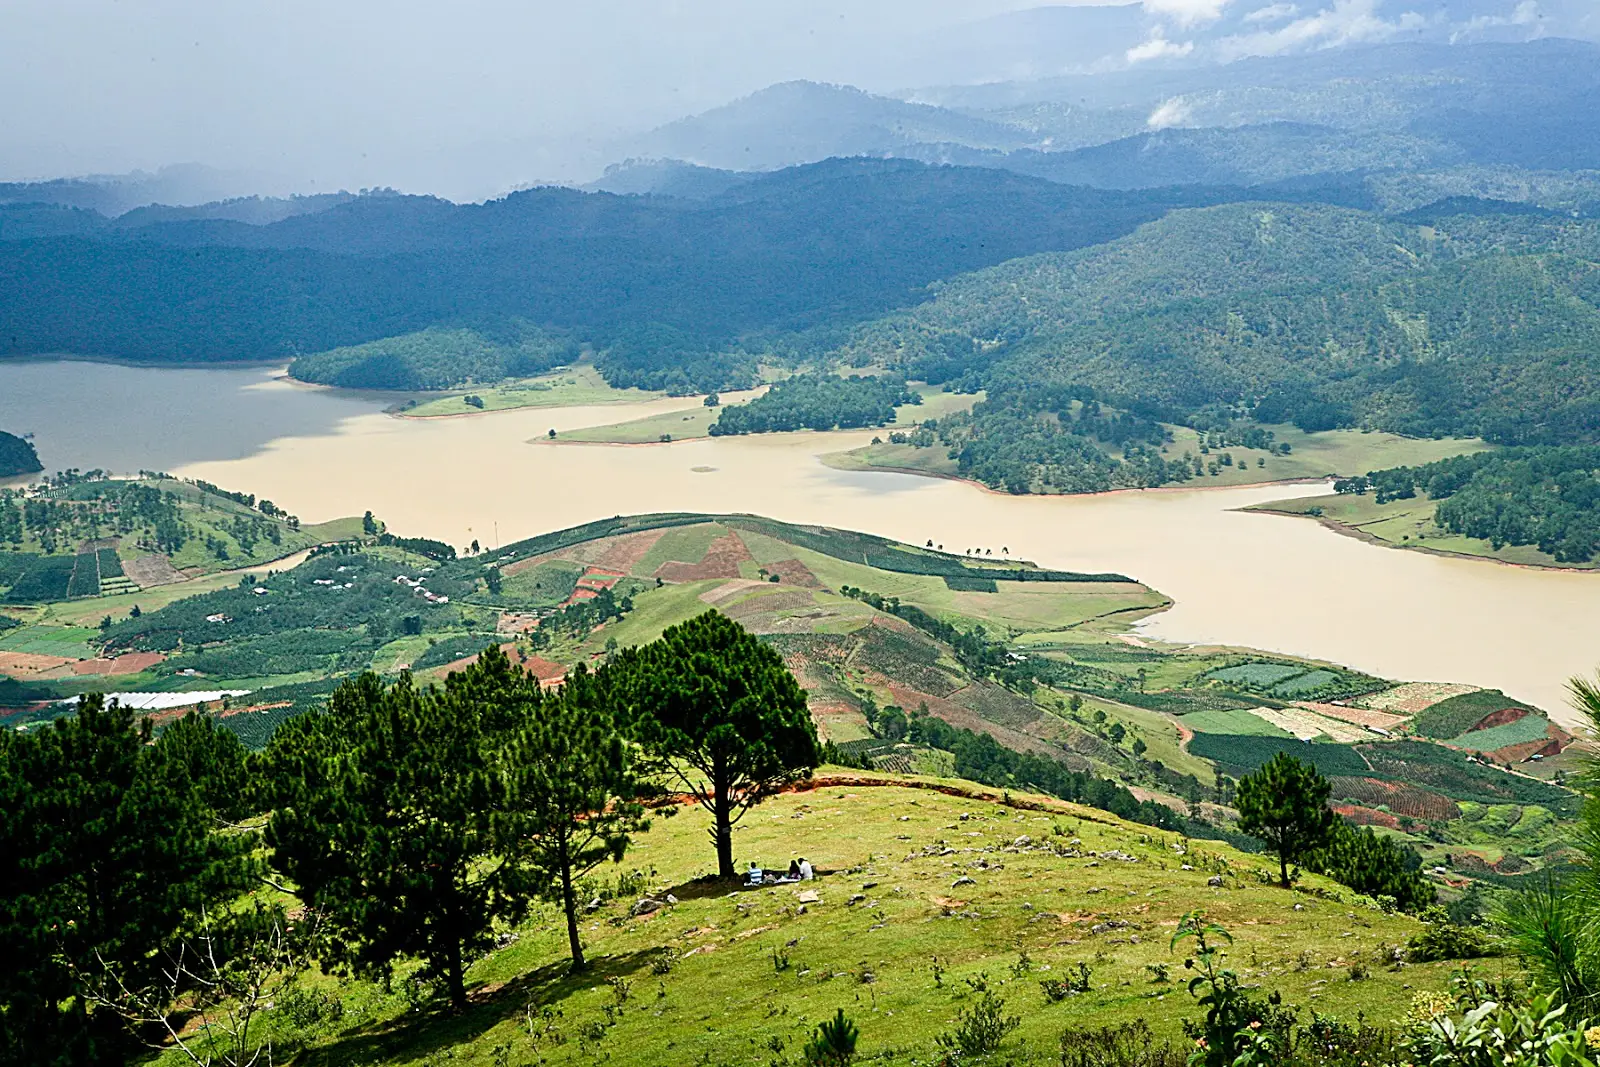 Aerial view of Dak Lak province